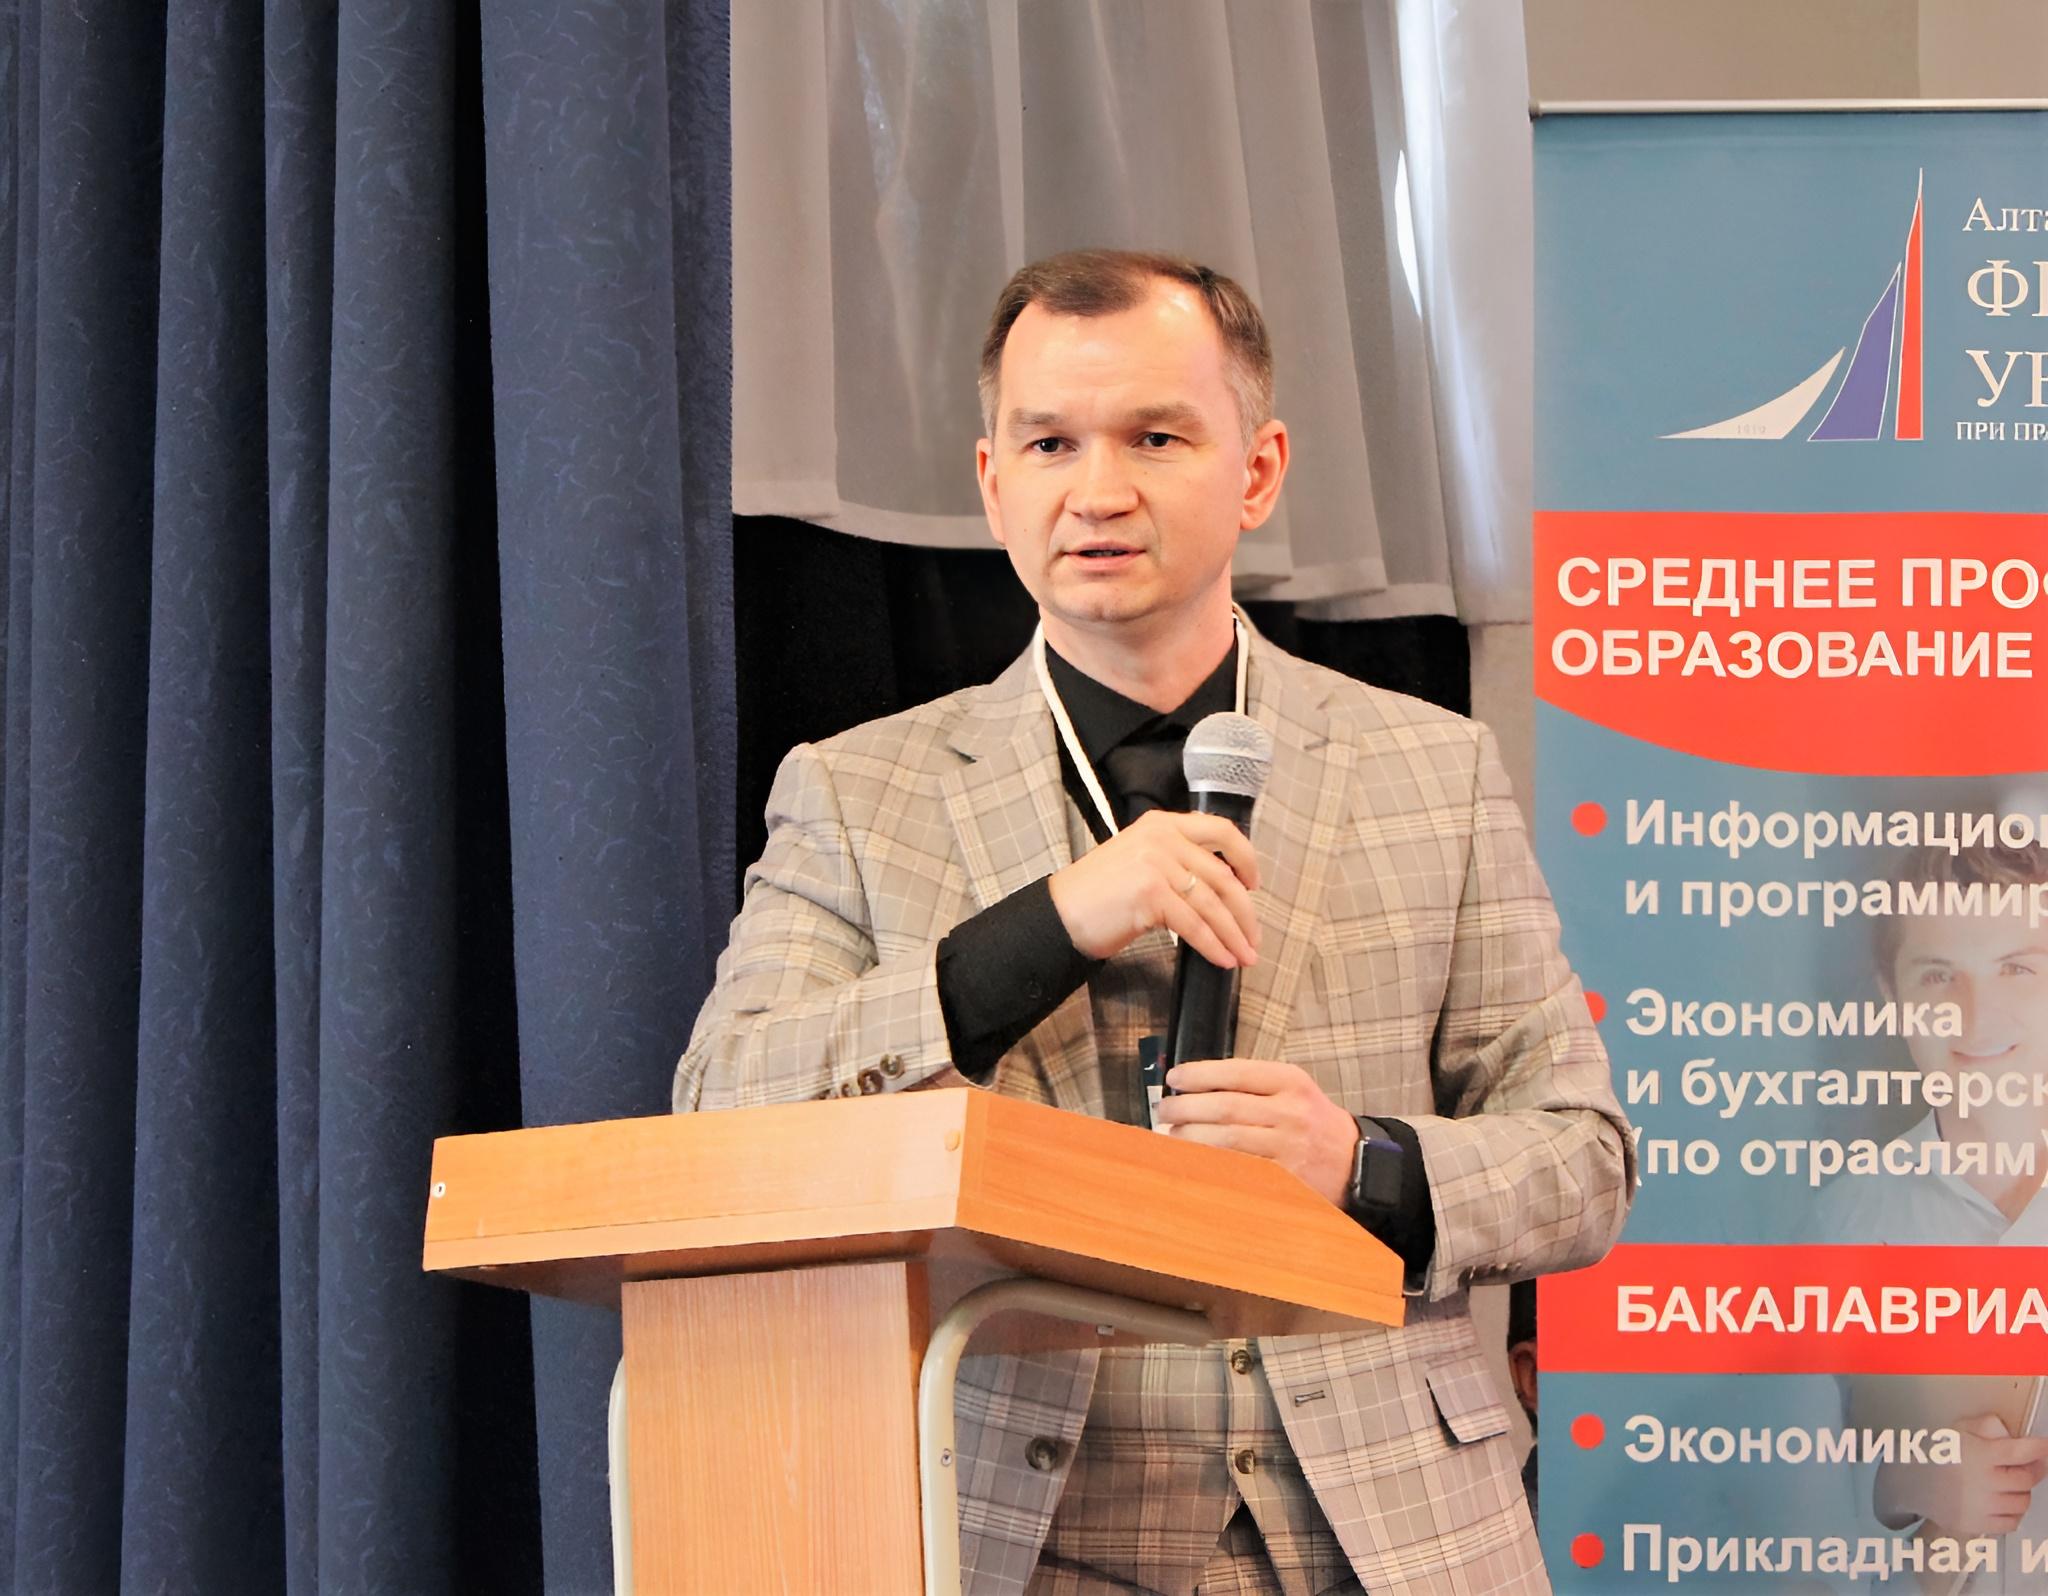 Евгений Зрюмов, министр цифрового развития и связи Алтайского края